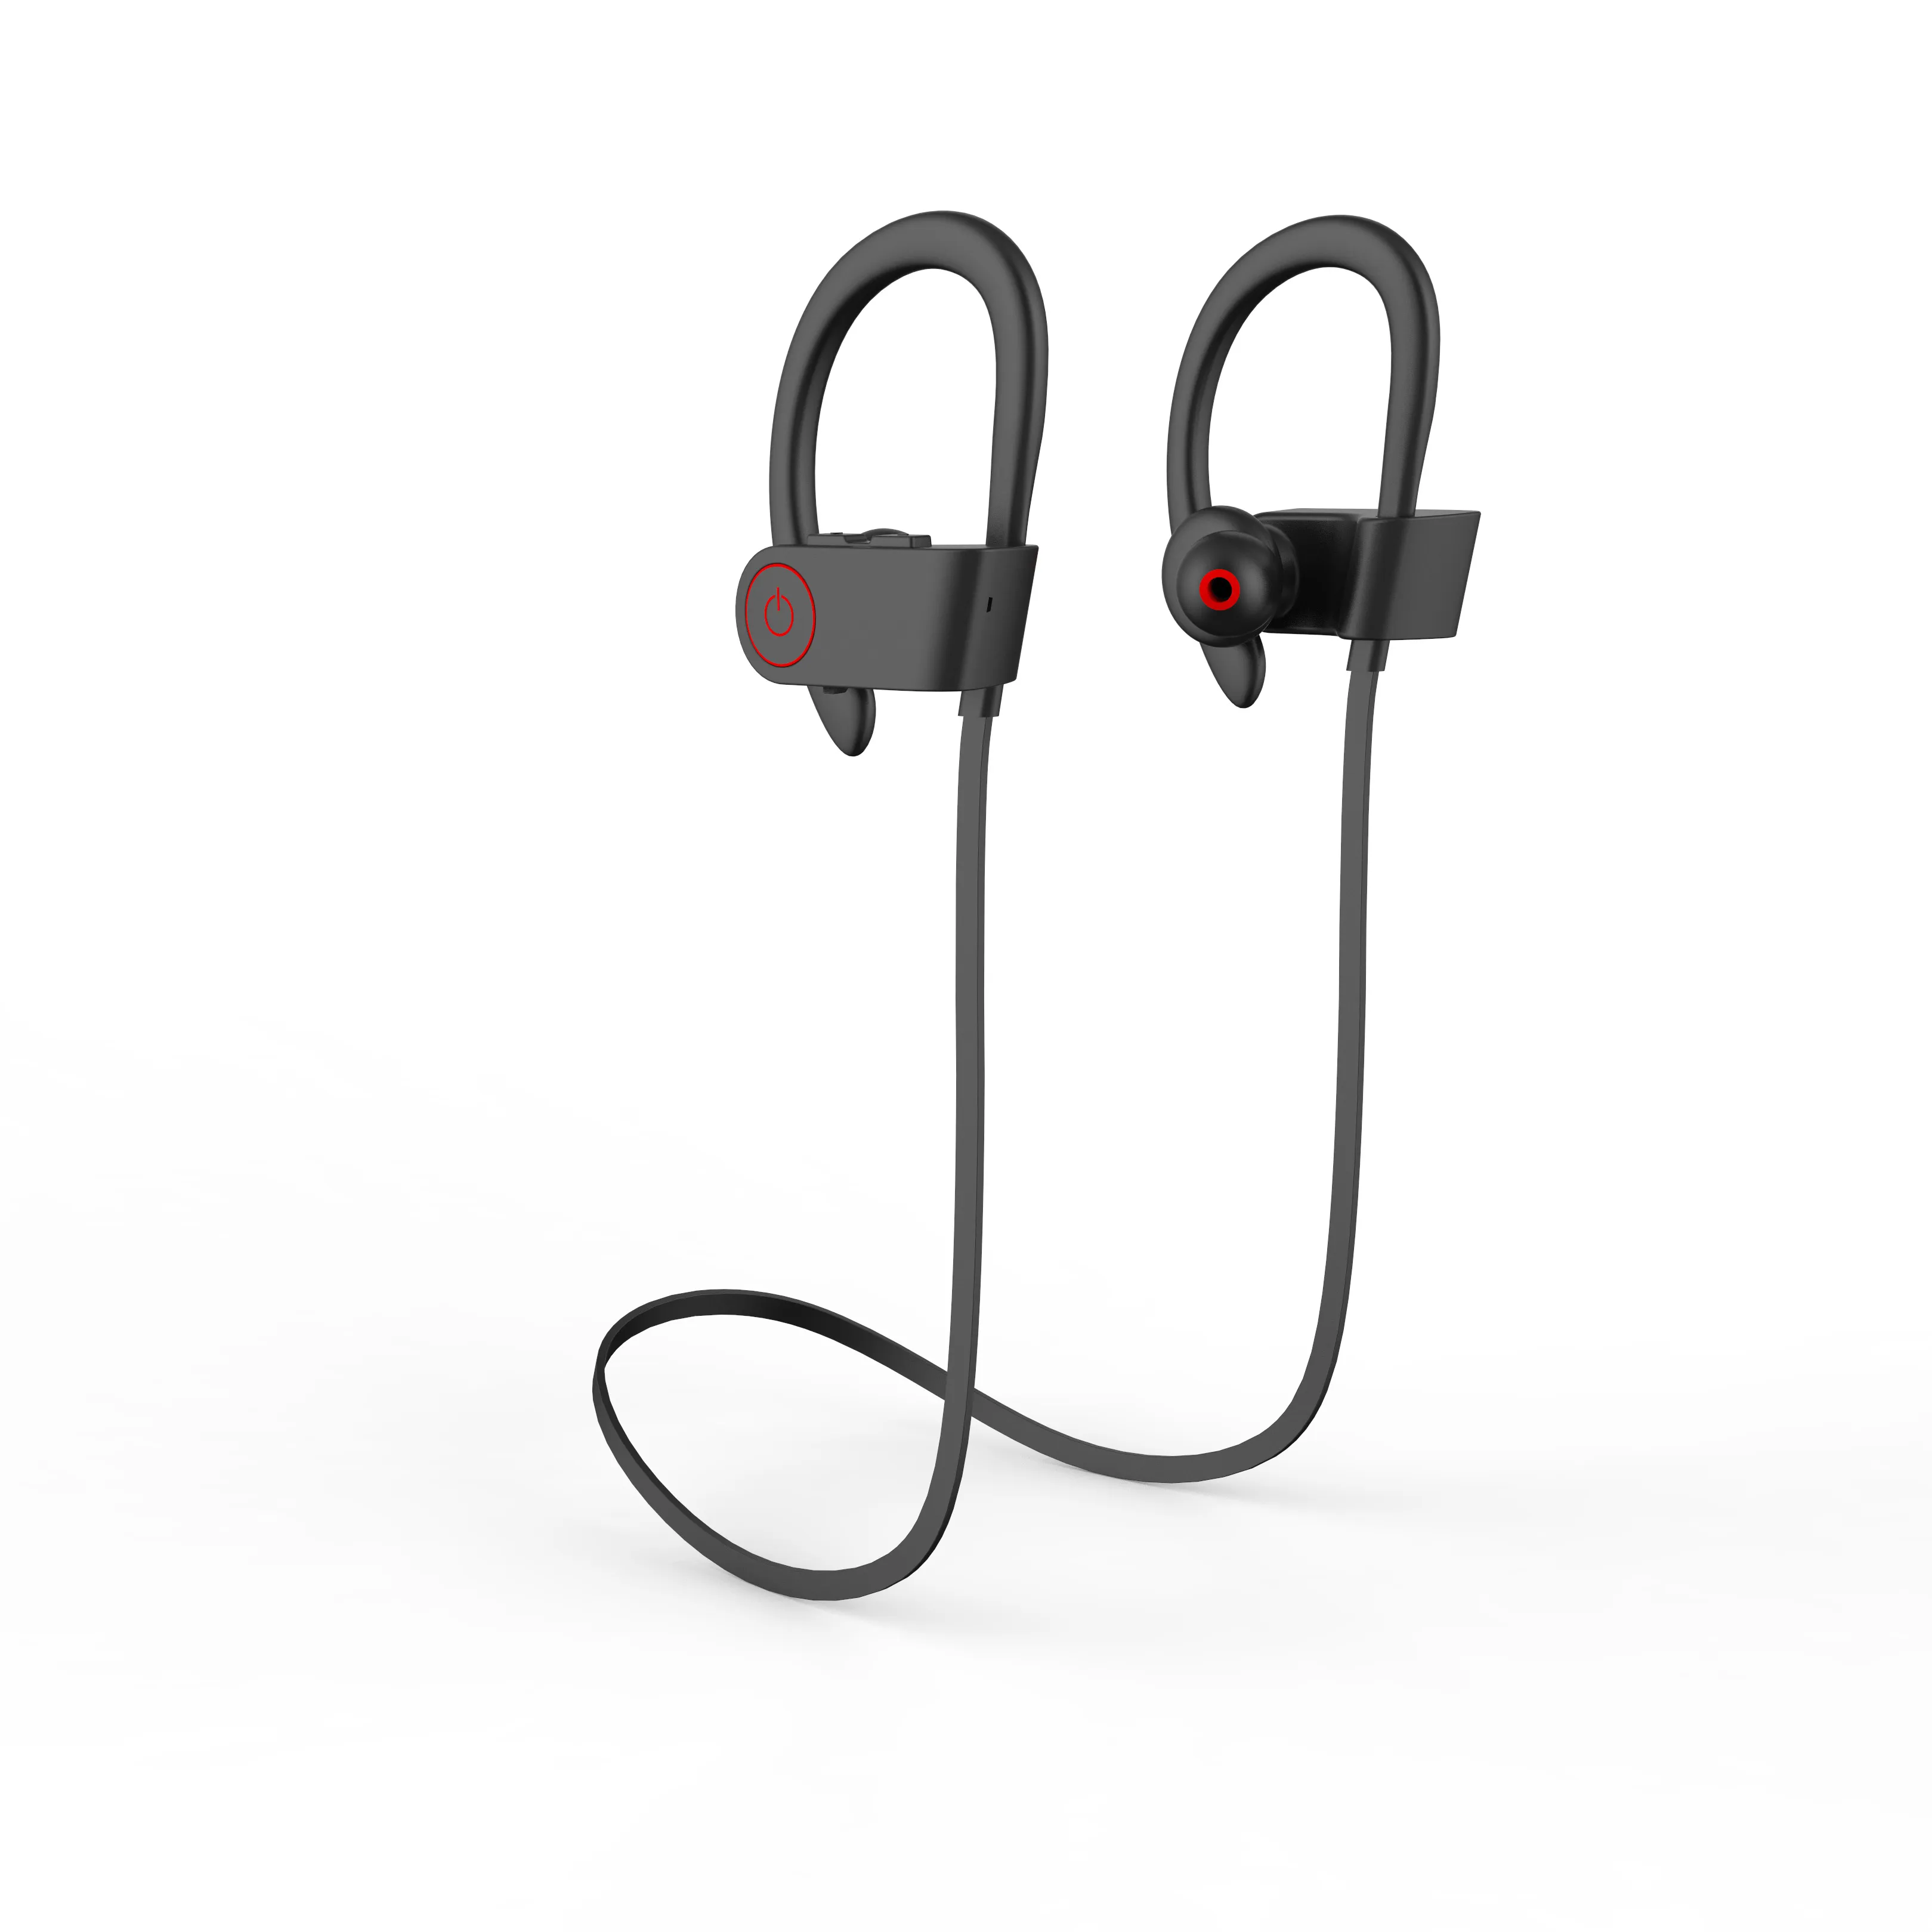 Bestes Elektronik produkt Drahtlose Ohrhörer Kopfhörer Lange Hörzeit Bluetooth-Kopfhörer für den Sport